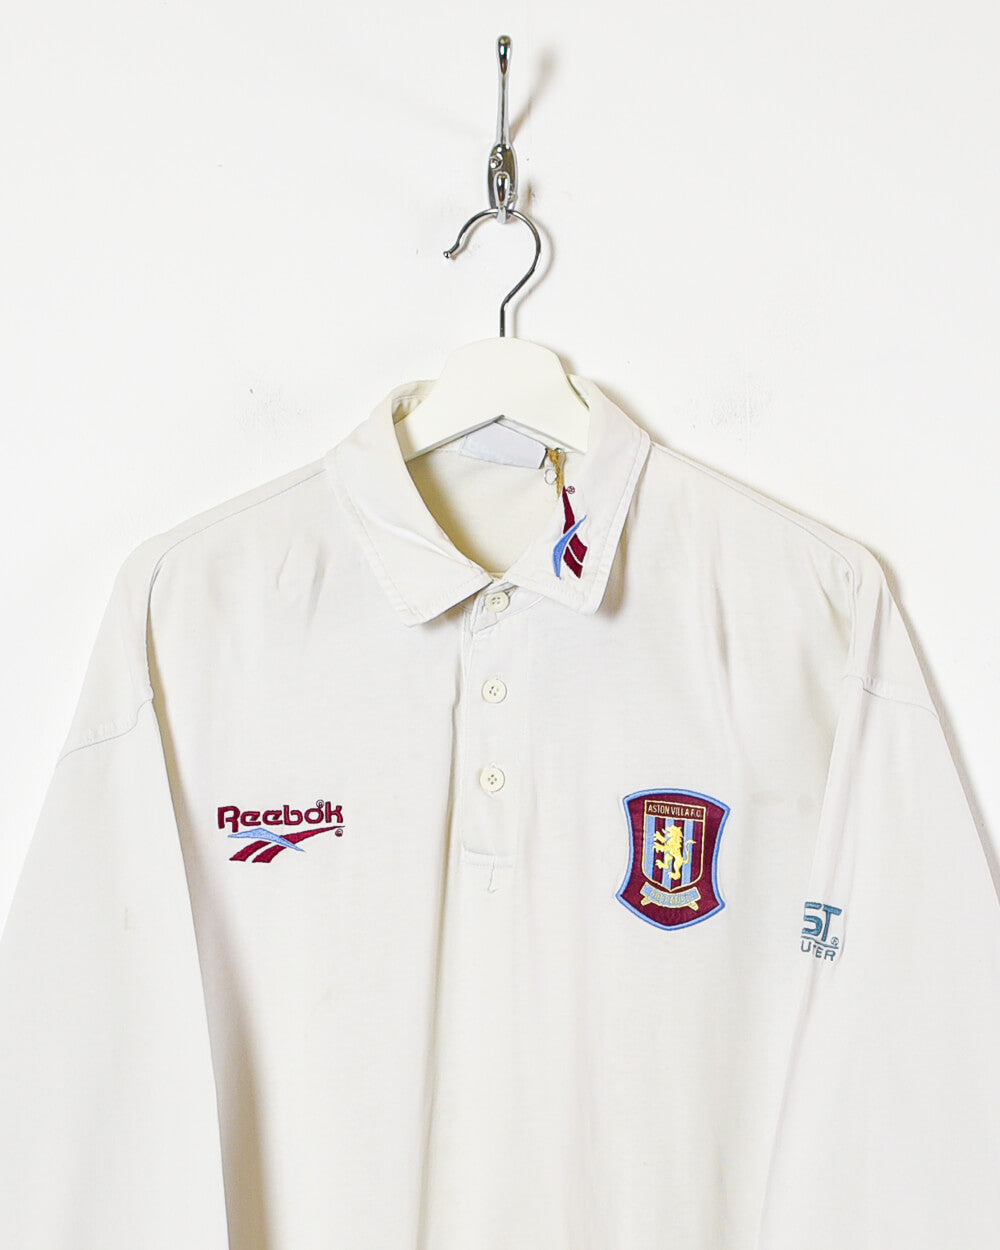 White Reebok 1996/97 Aston Villa Rugby Shirt - Medium